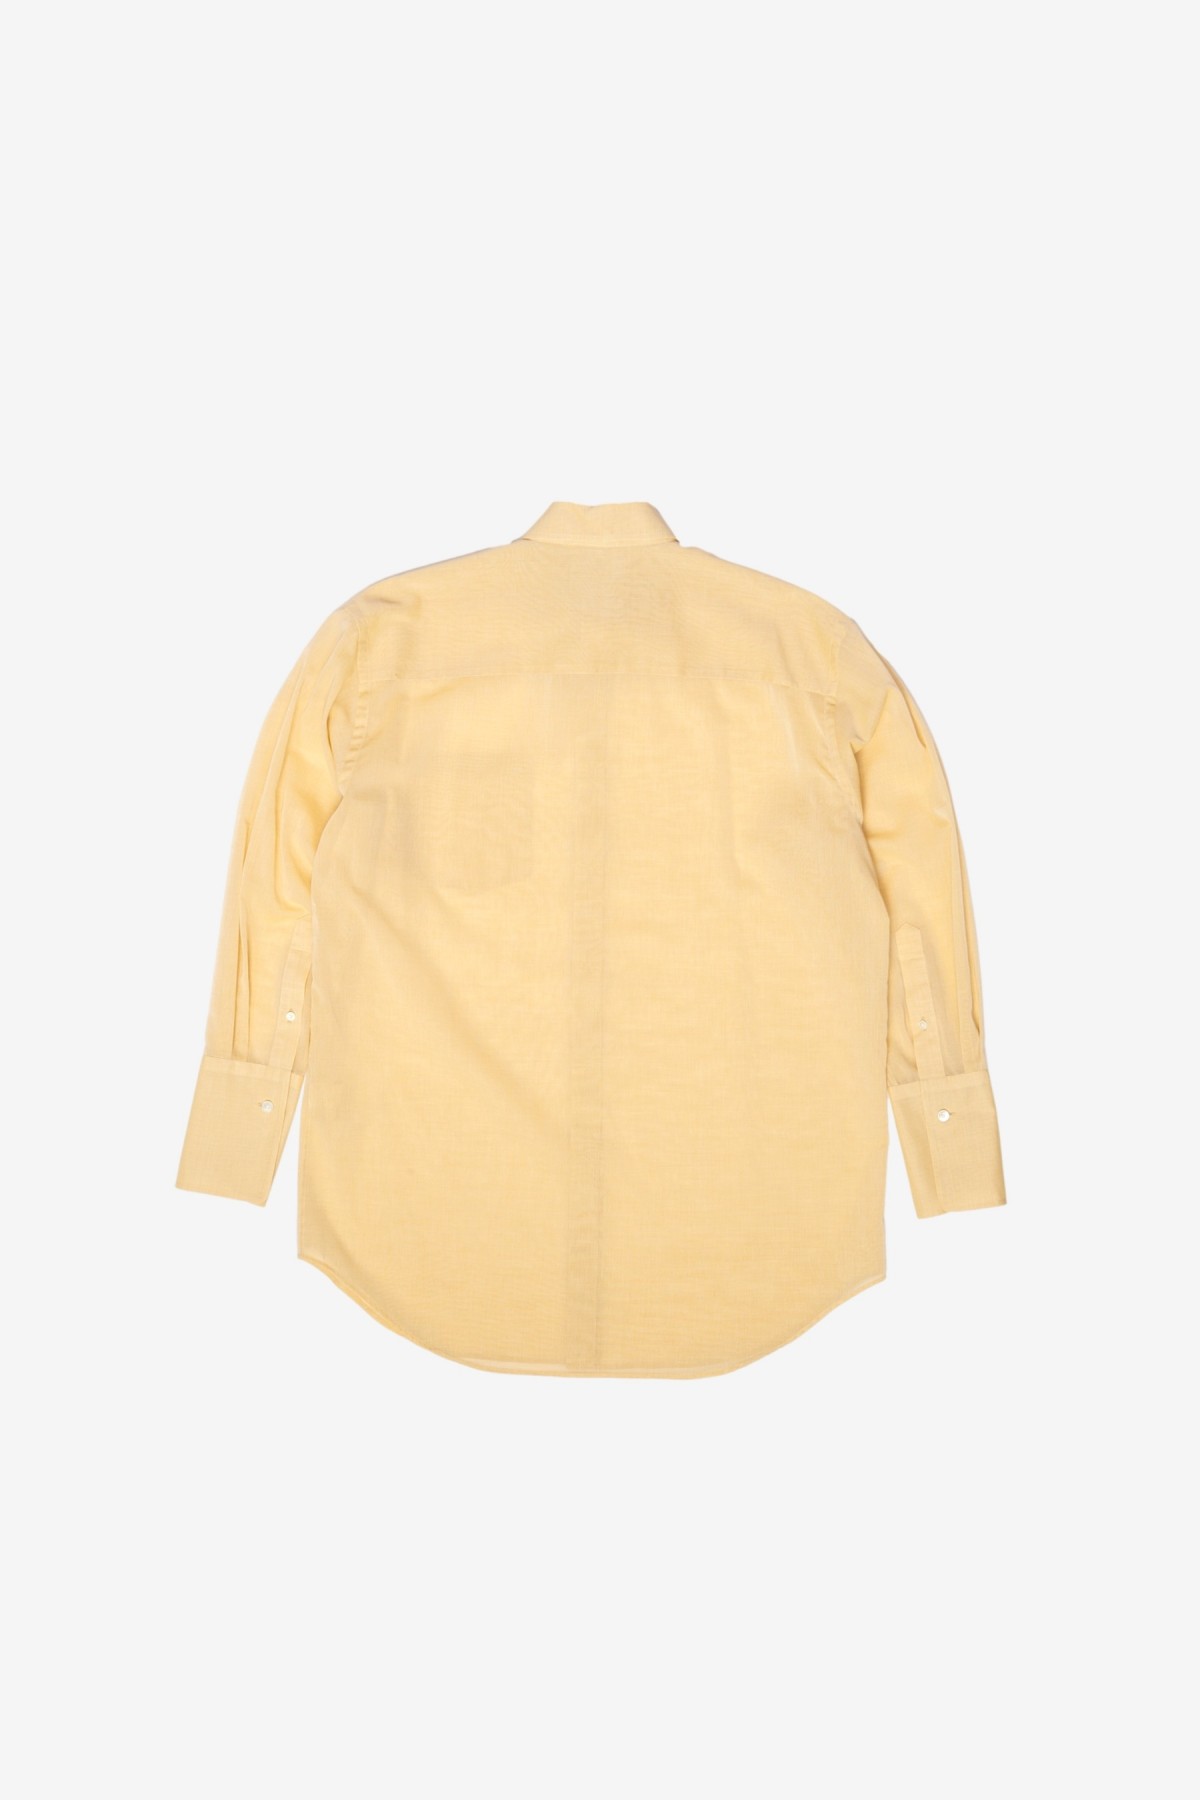 Auralee Hard Twist Finx Organdy Shirt in Light Yellow Chambray